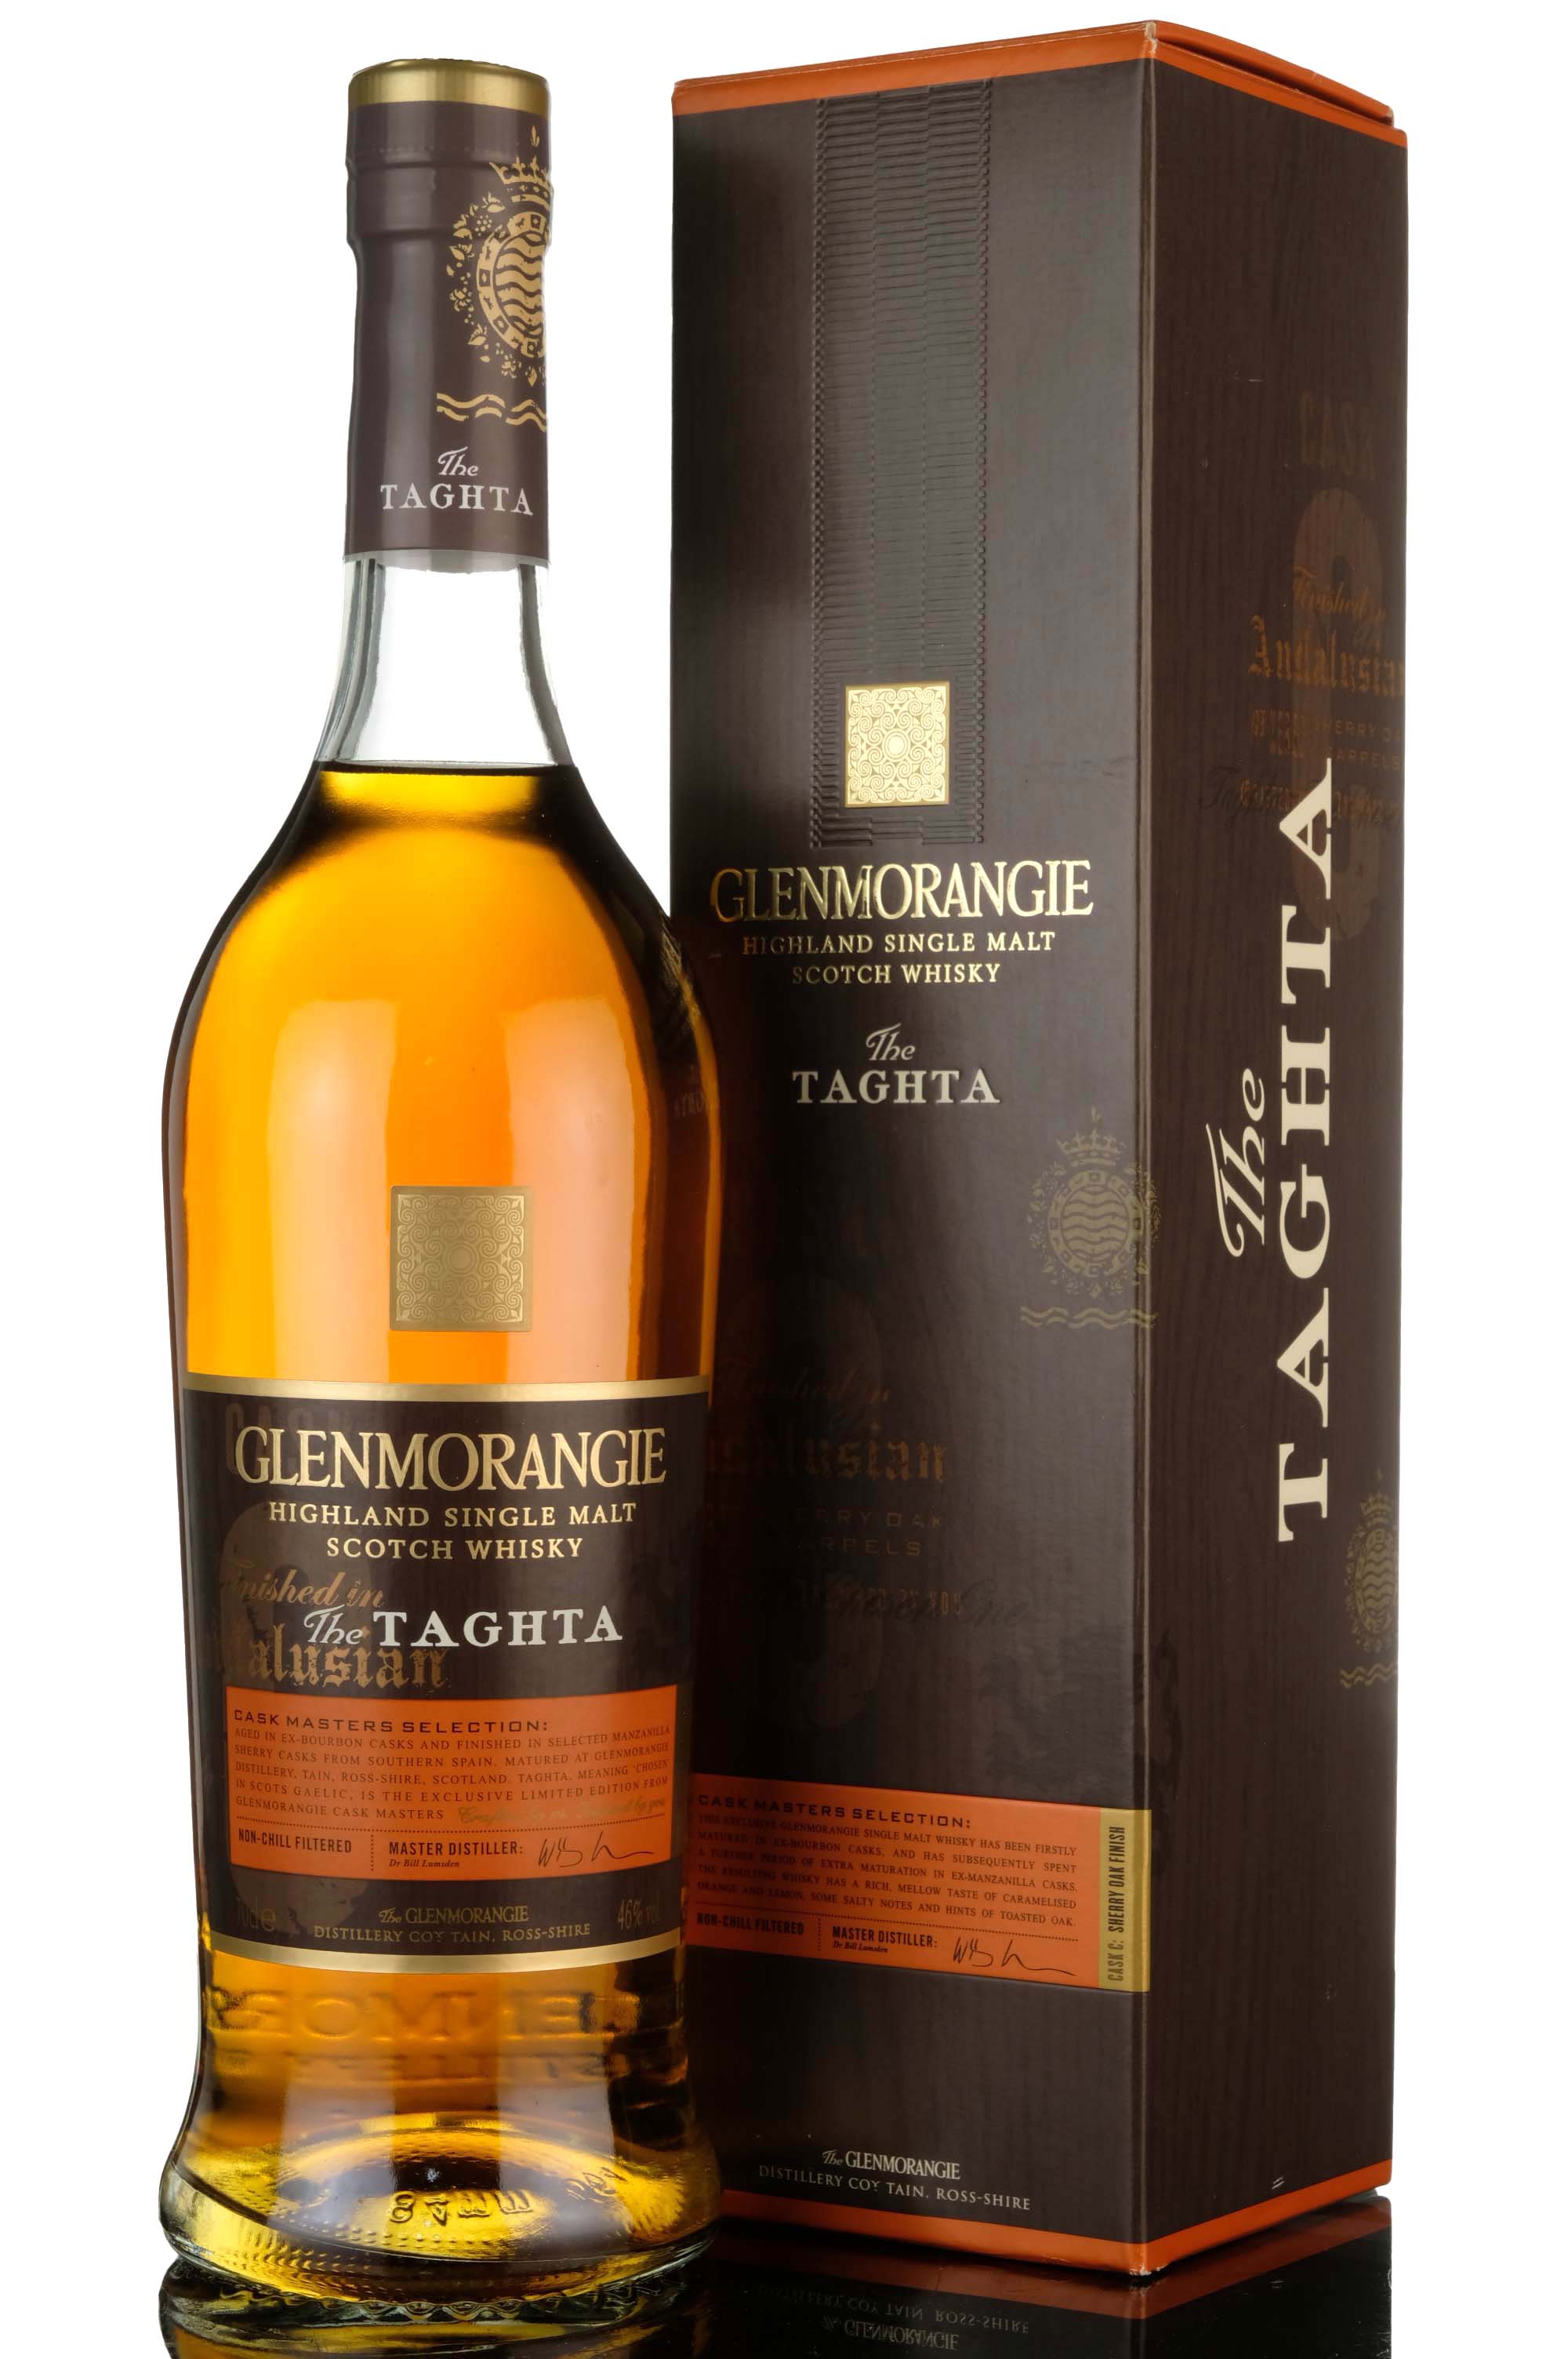 Glenmorangie The Taghta - 2014 Release